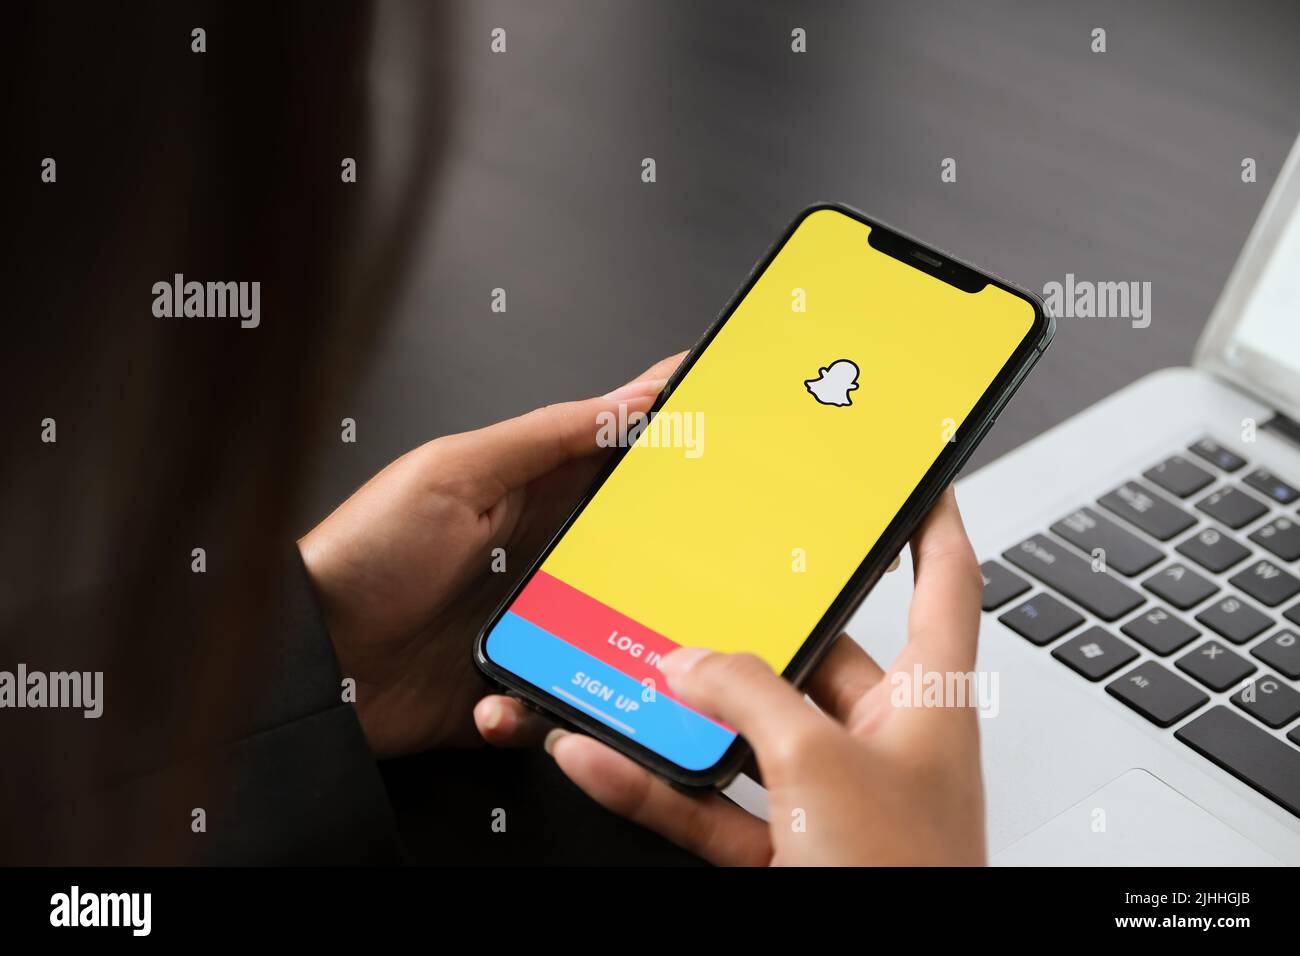 CHIANG MAI, THAILAND April 06 2021 : Frau hält ein iphone mit Social-Network-Service Snapchat auf dem Bildschirm Stockfoto